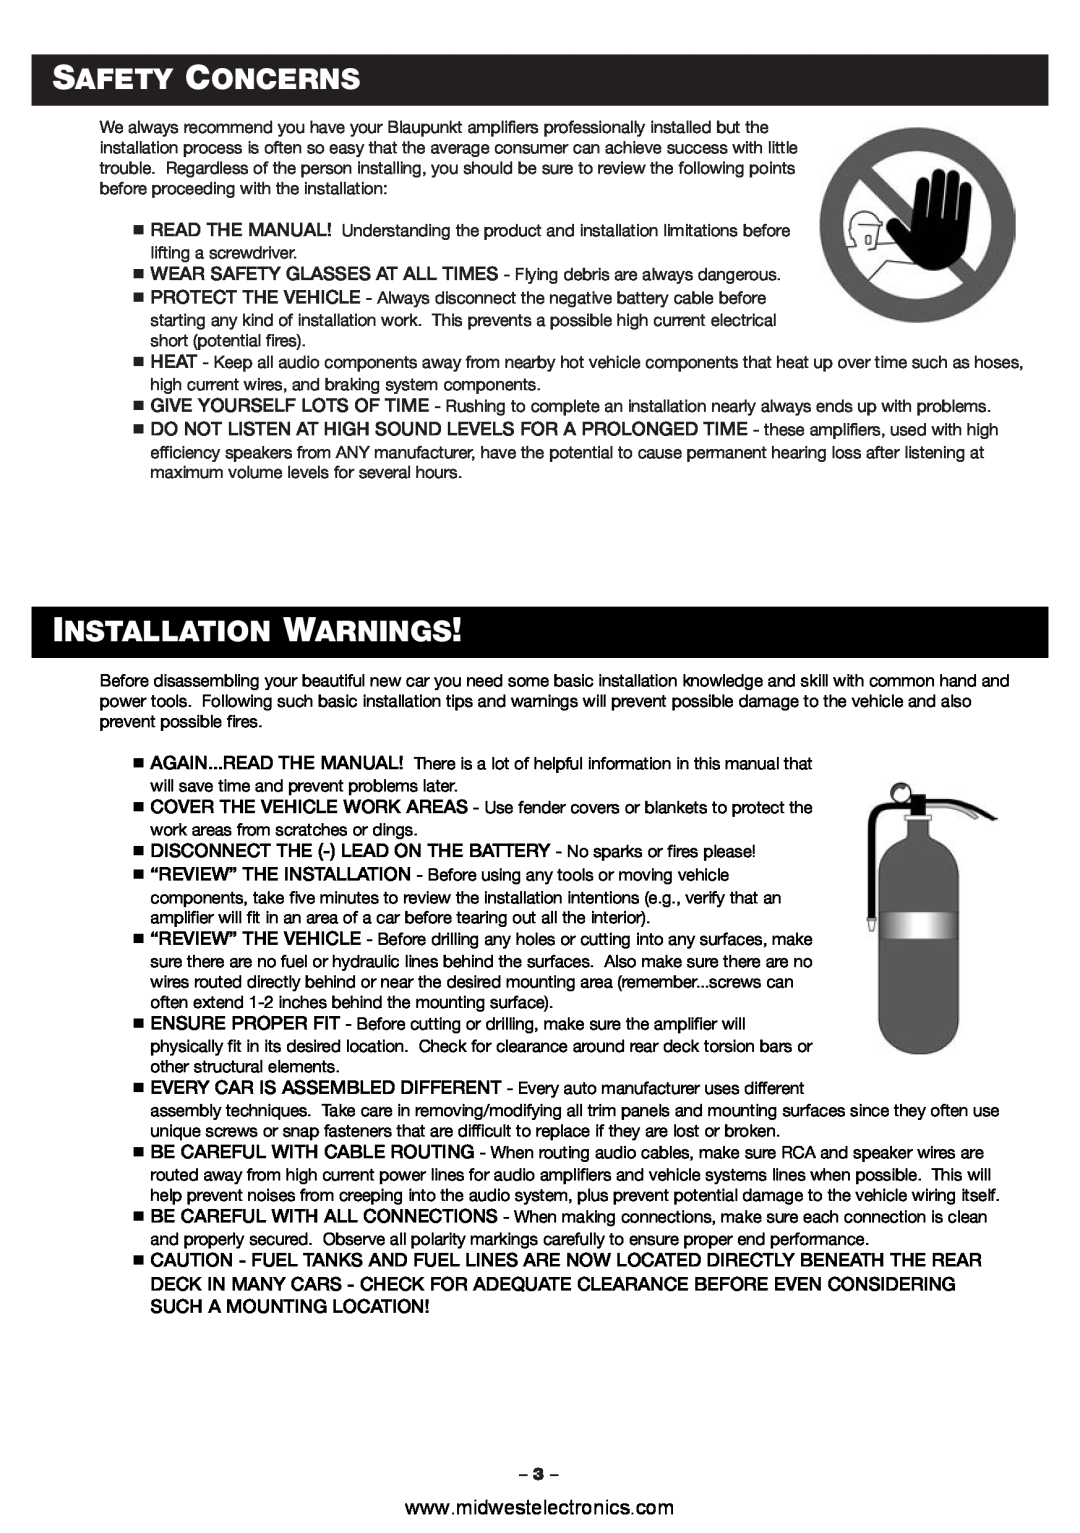 Blaupunkt PCA460 manual Safety Concerns, Installation Warnings 